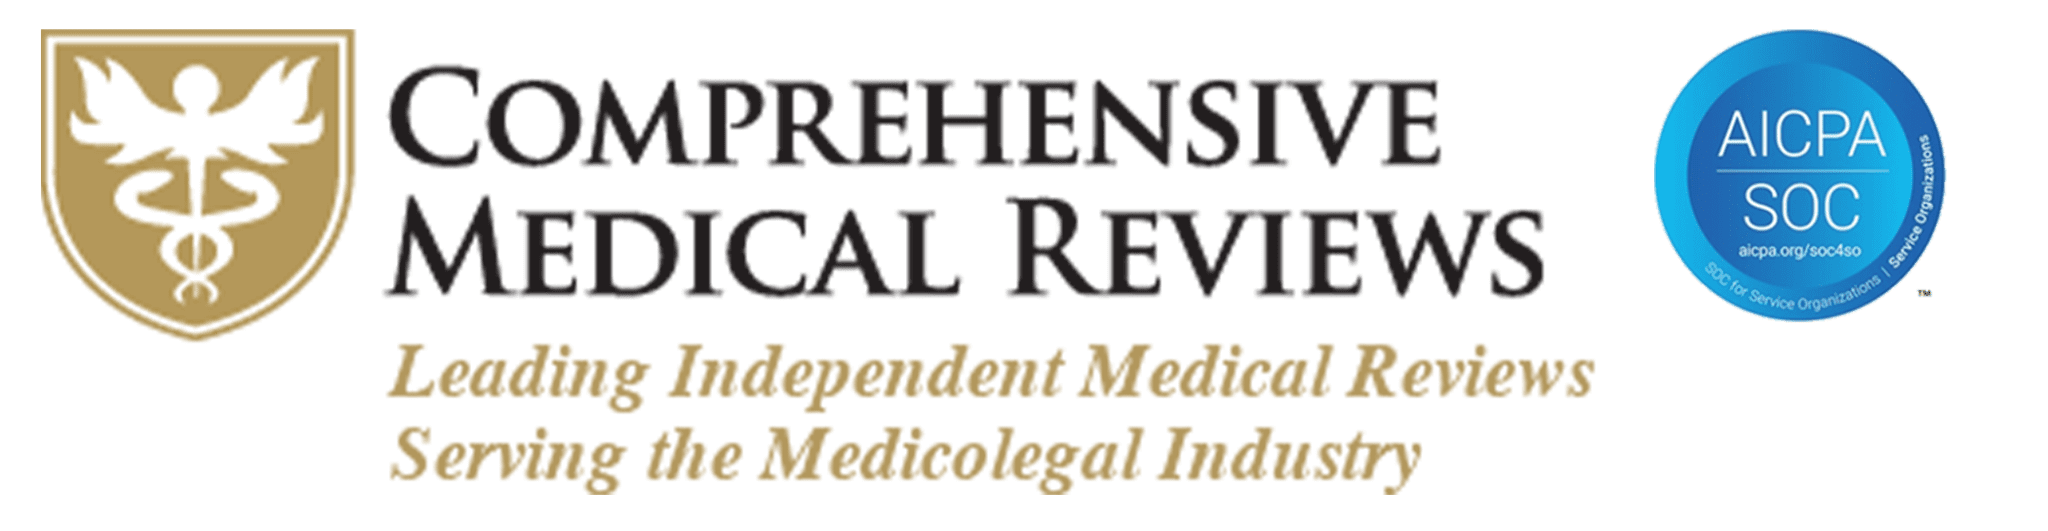 Comprehensive Medical Reviews